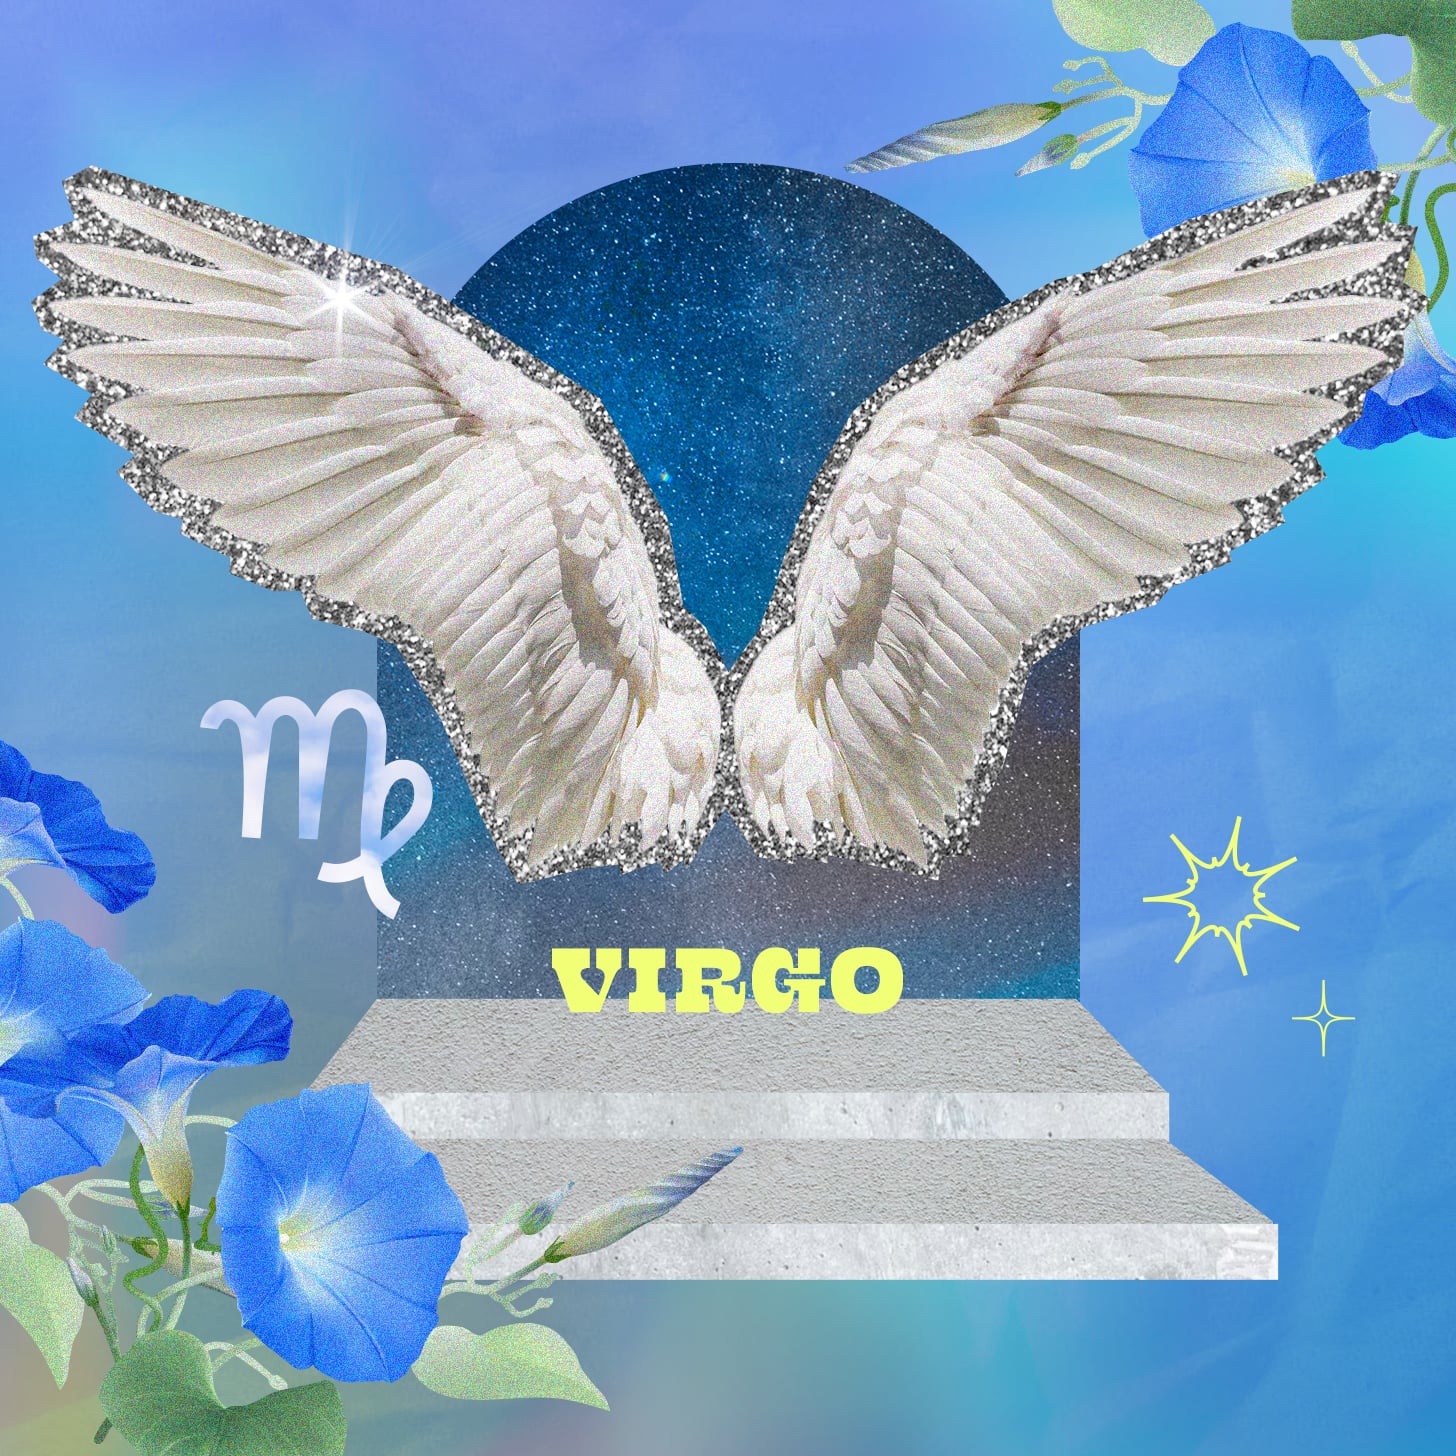 Virgo weekly horoscope for July 10, 2022